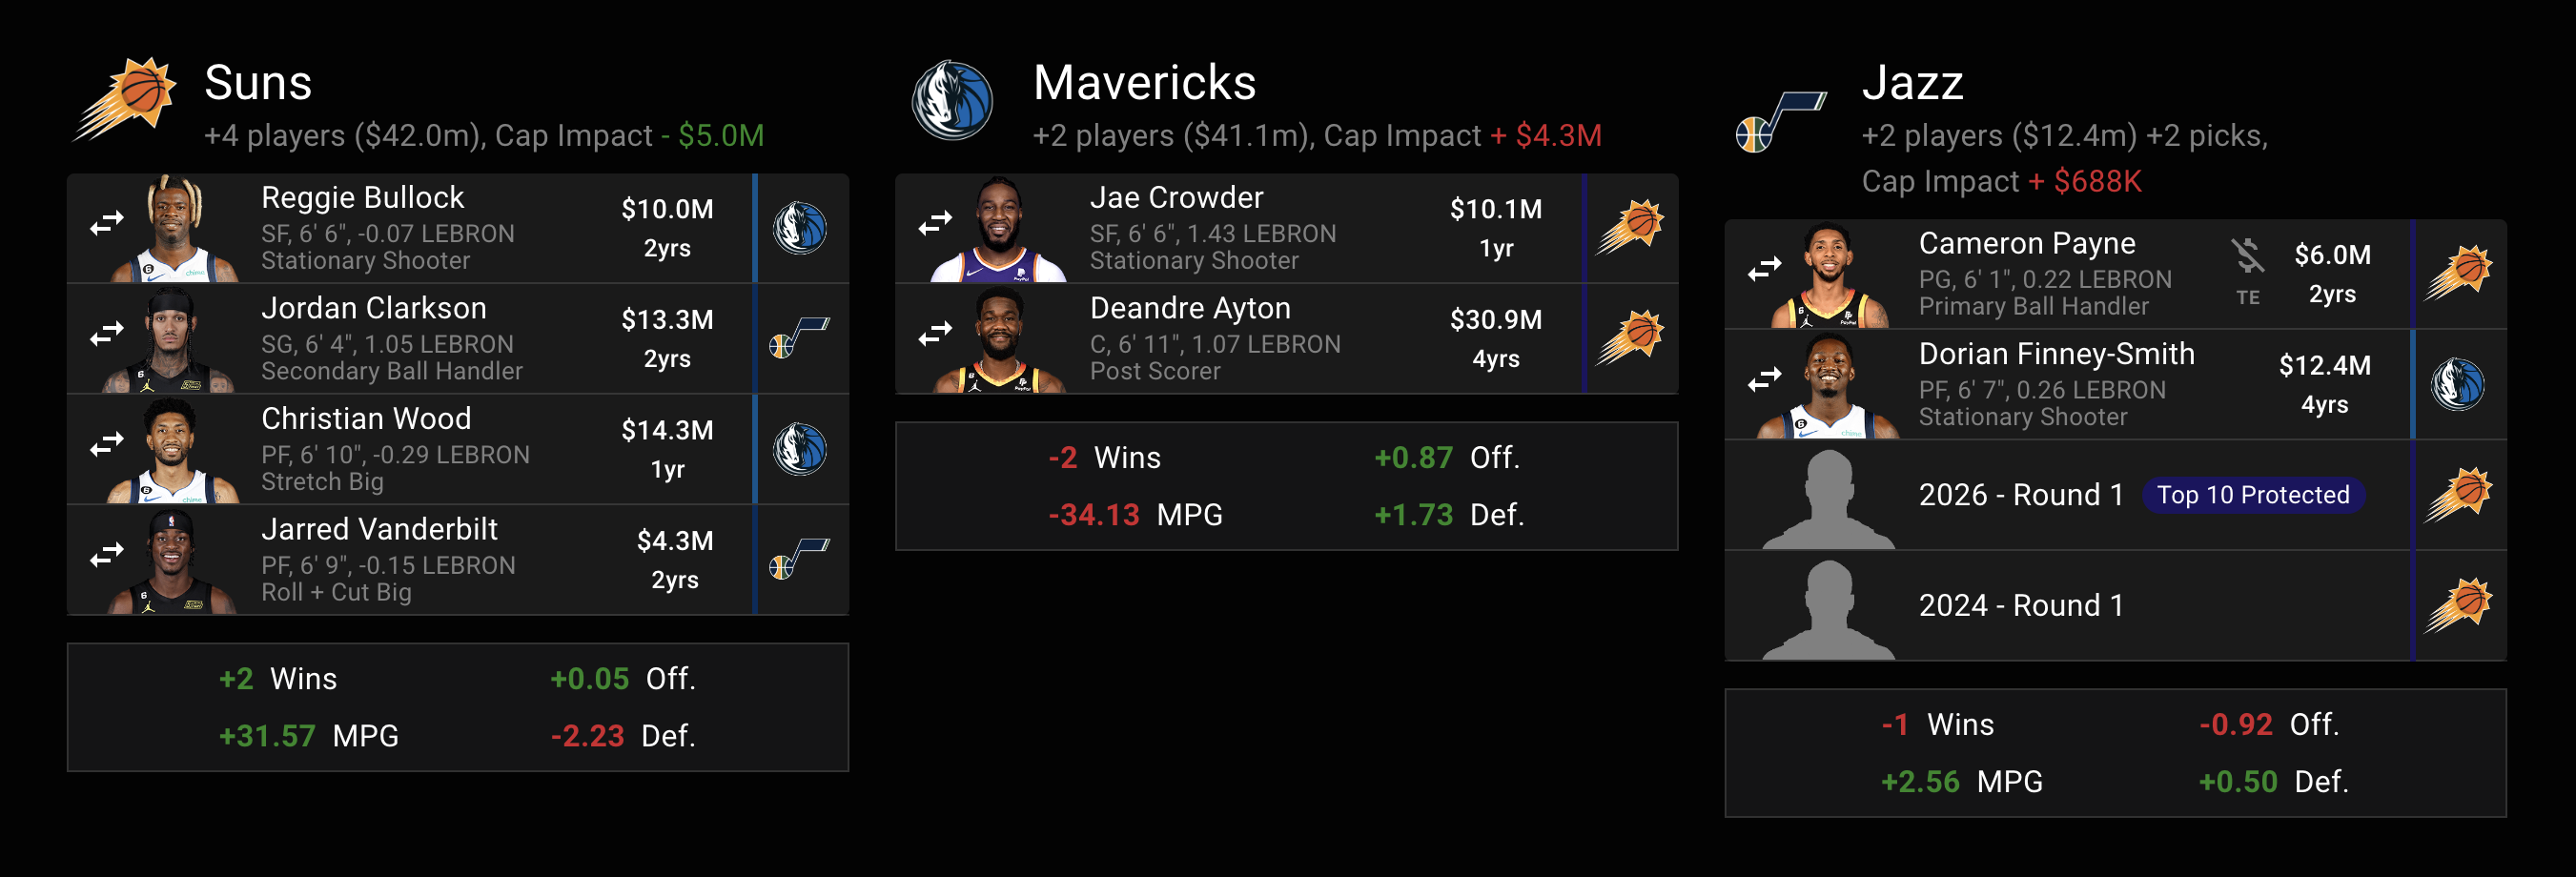 Phoenix Suns make a 3-team trade with Mavericks and Jazz